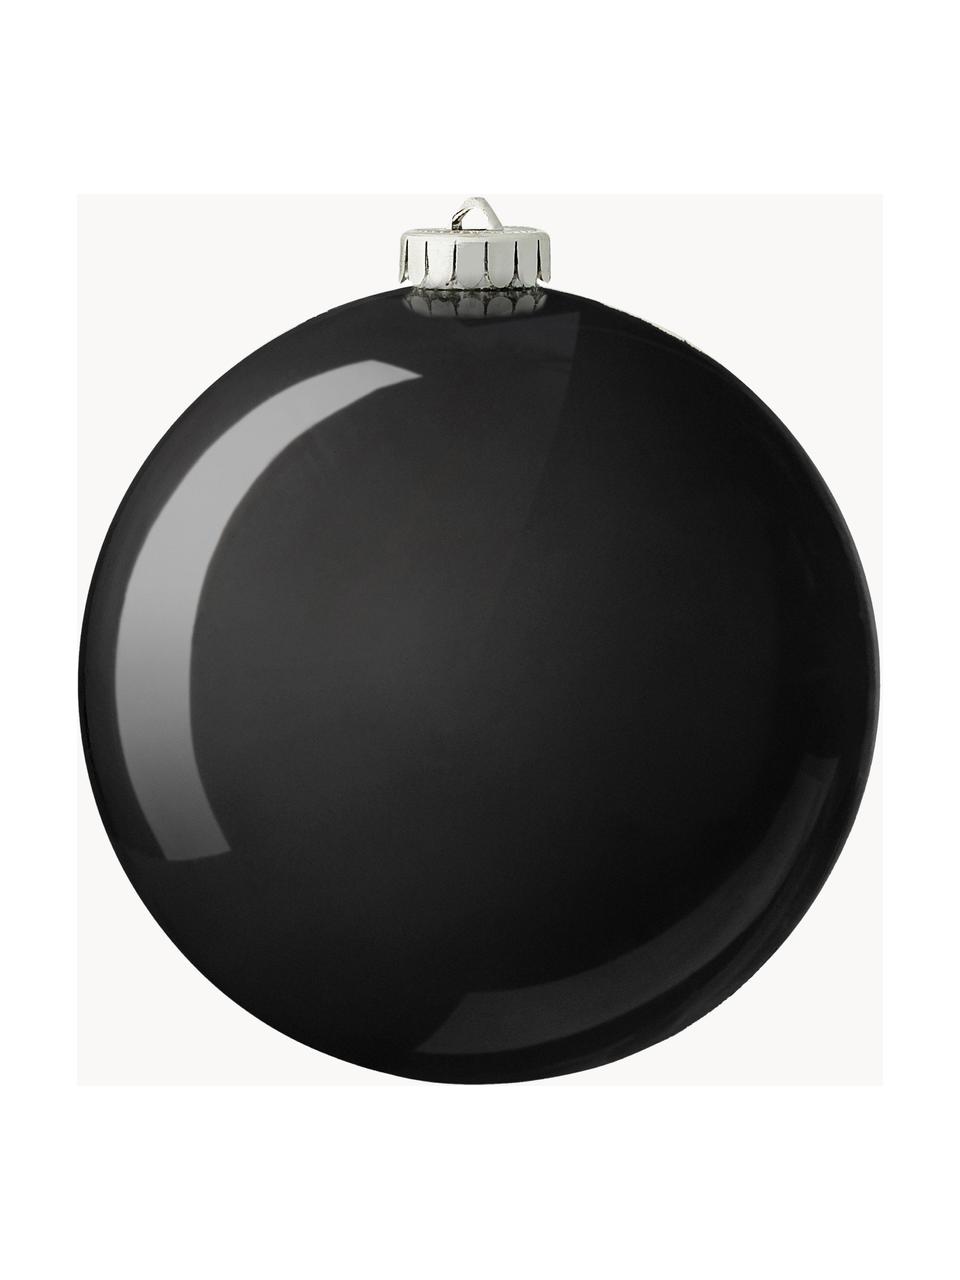 Bola de Navidad irrompibles Stix, Plástico, Negro, Ø 20 cm